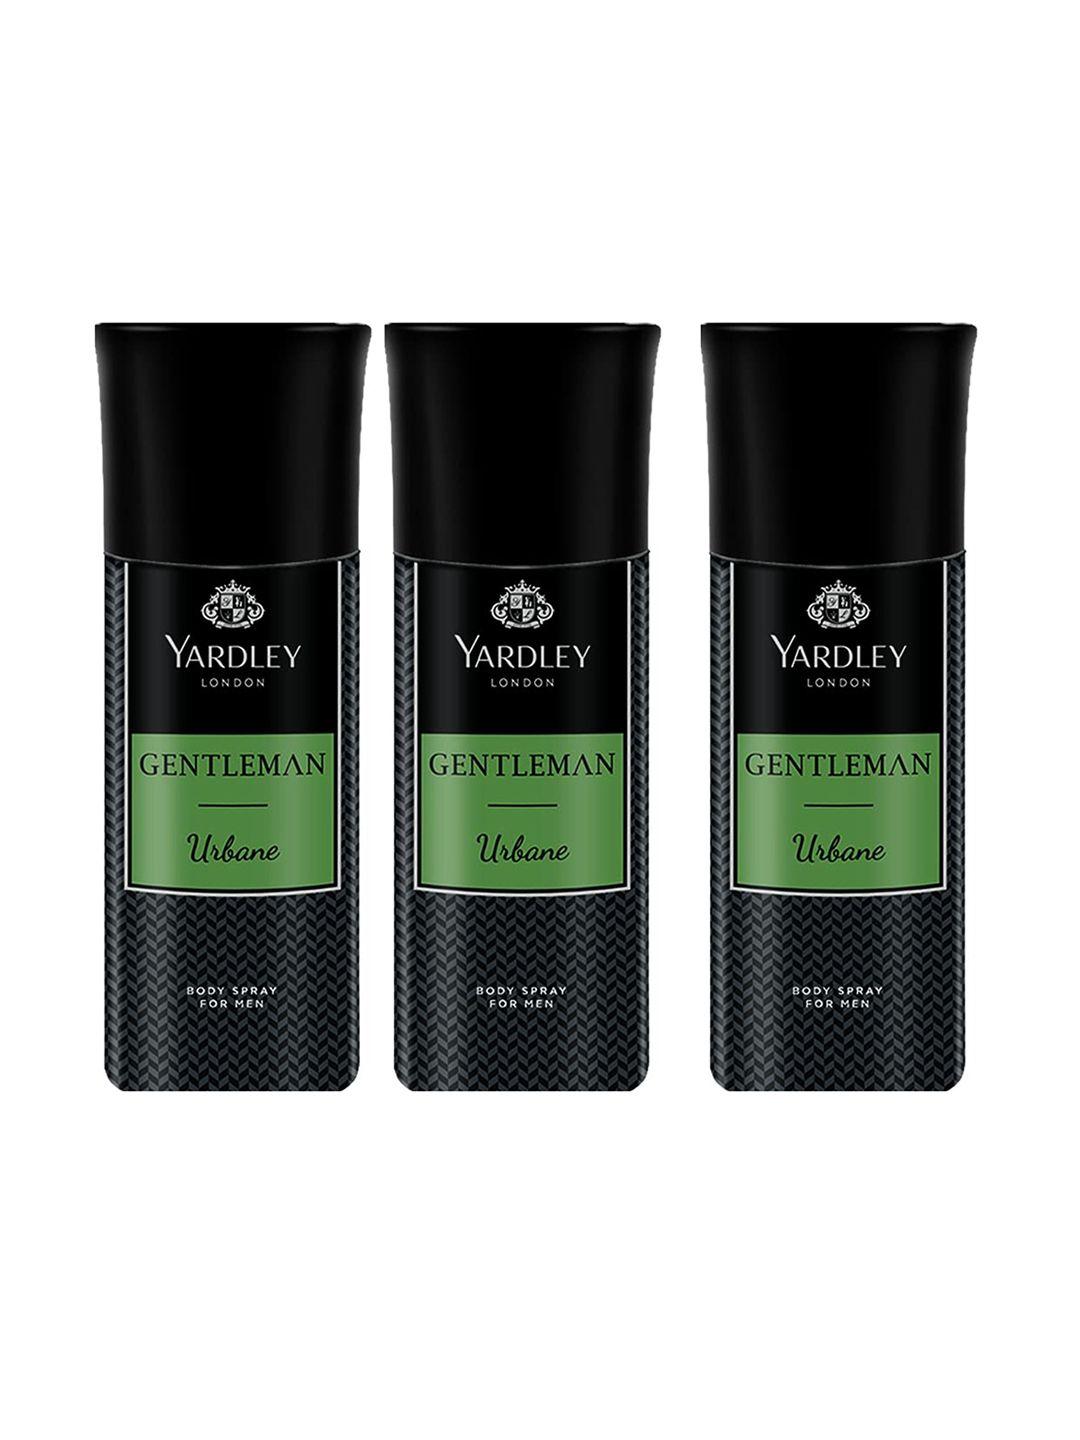 yardley london unisex men set of 3 gentleman urbane deodorant body spray - 150 ml each